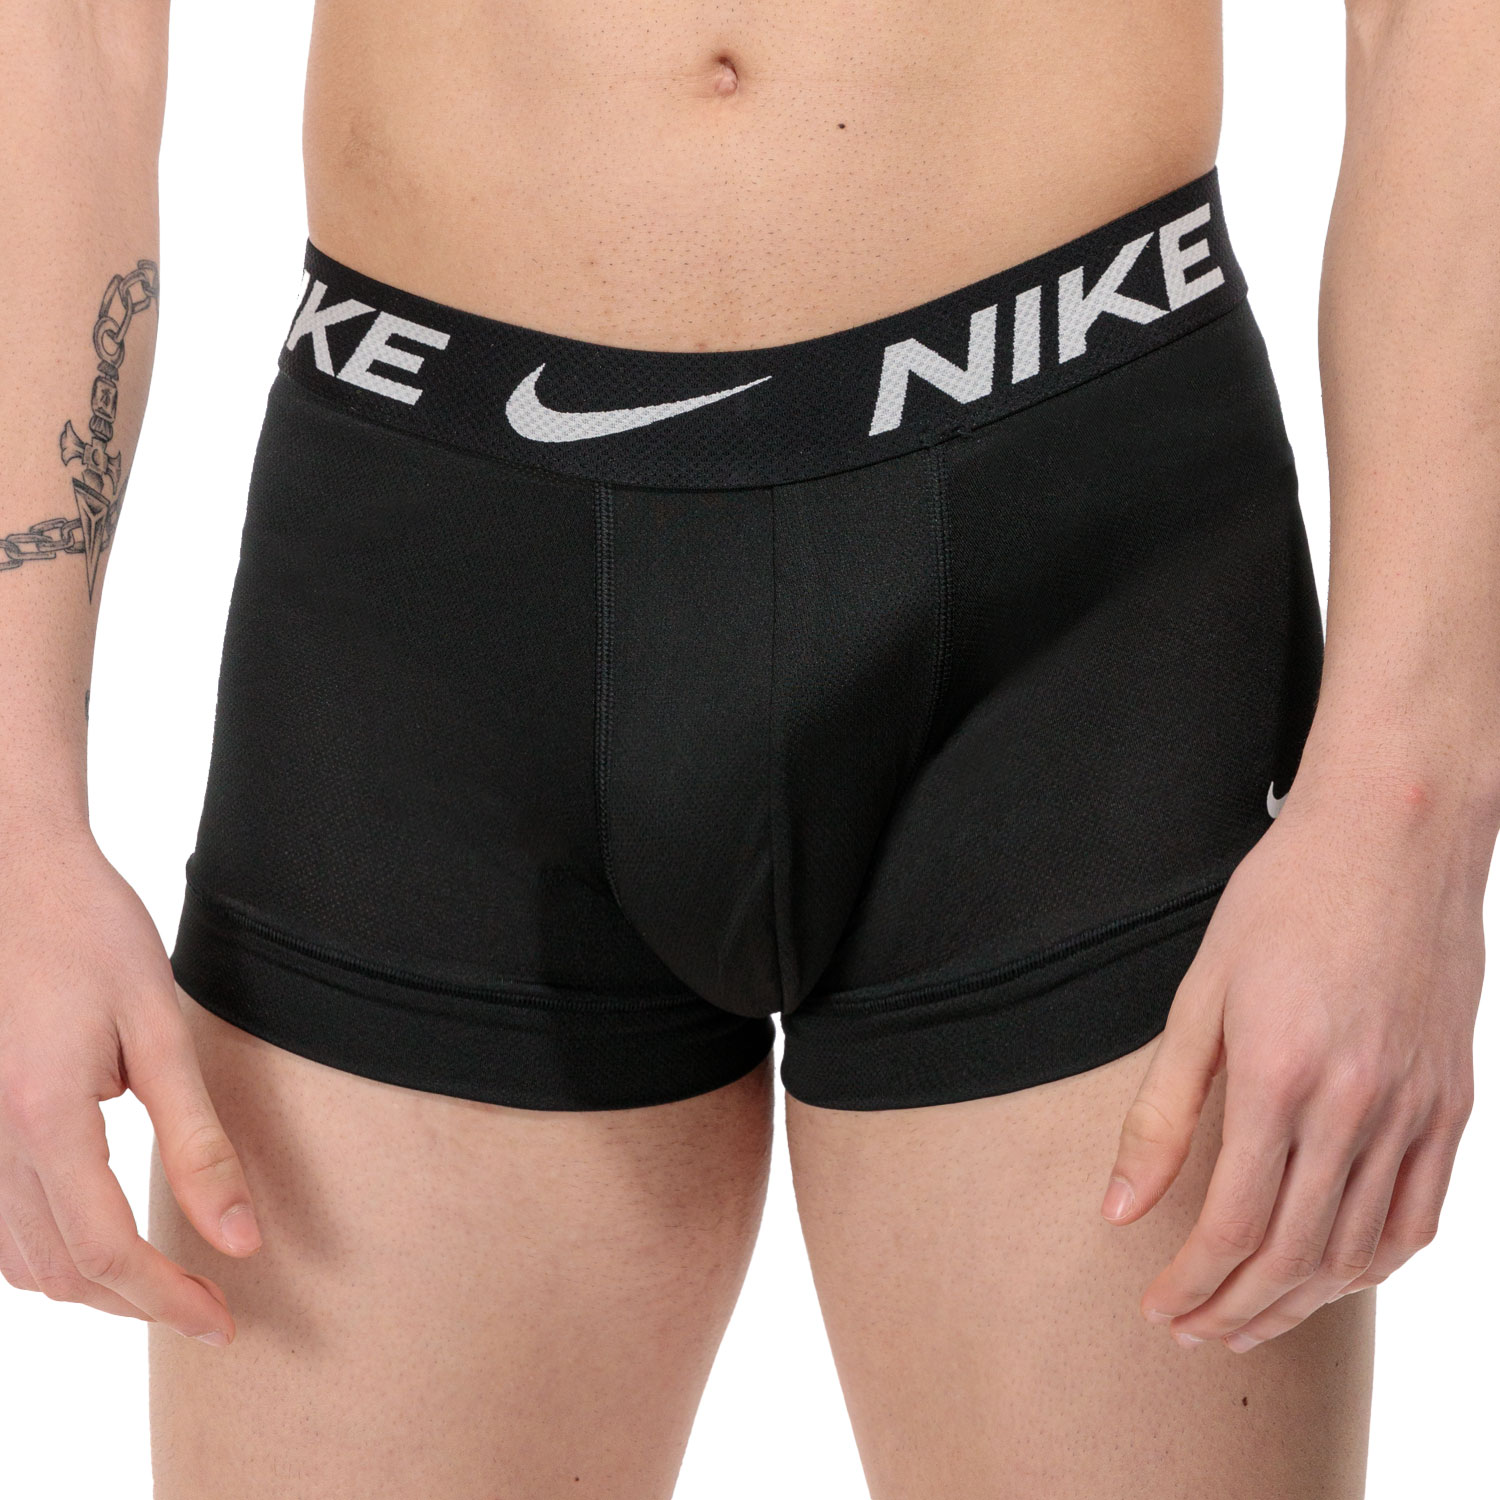 Nike Trunk x 3 Men's Underwear Boxer - Black